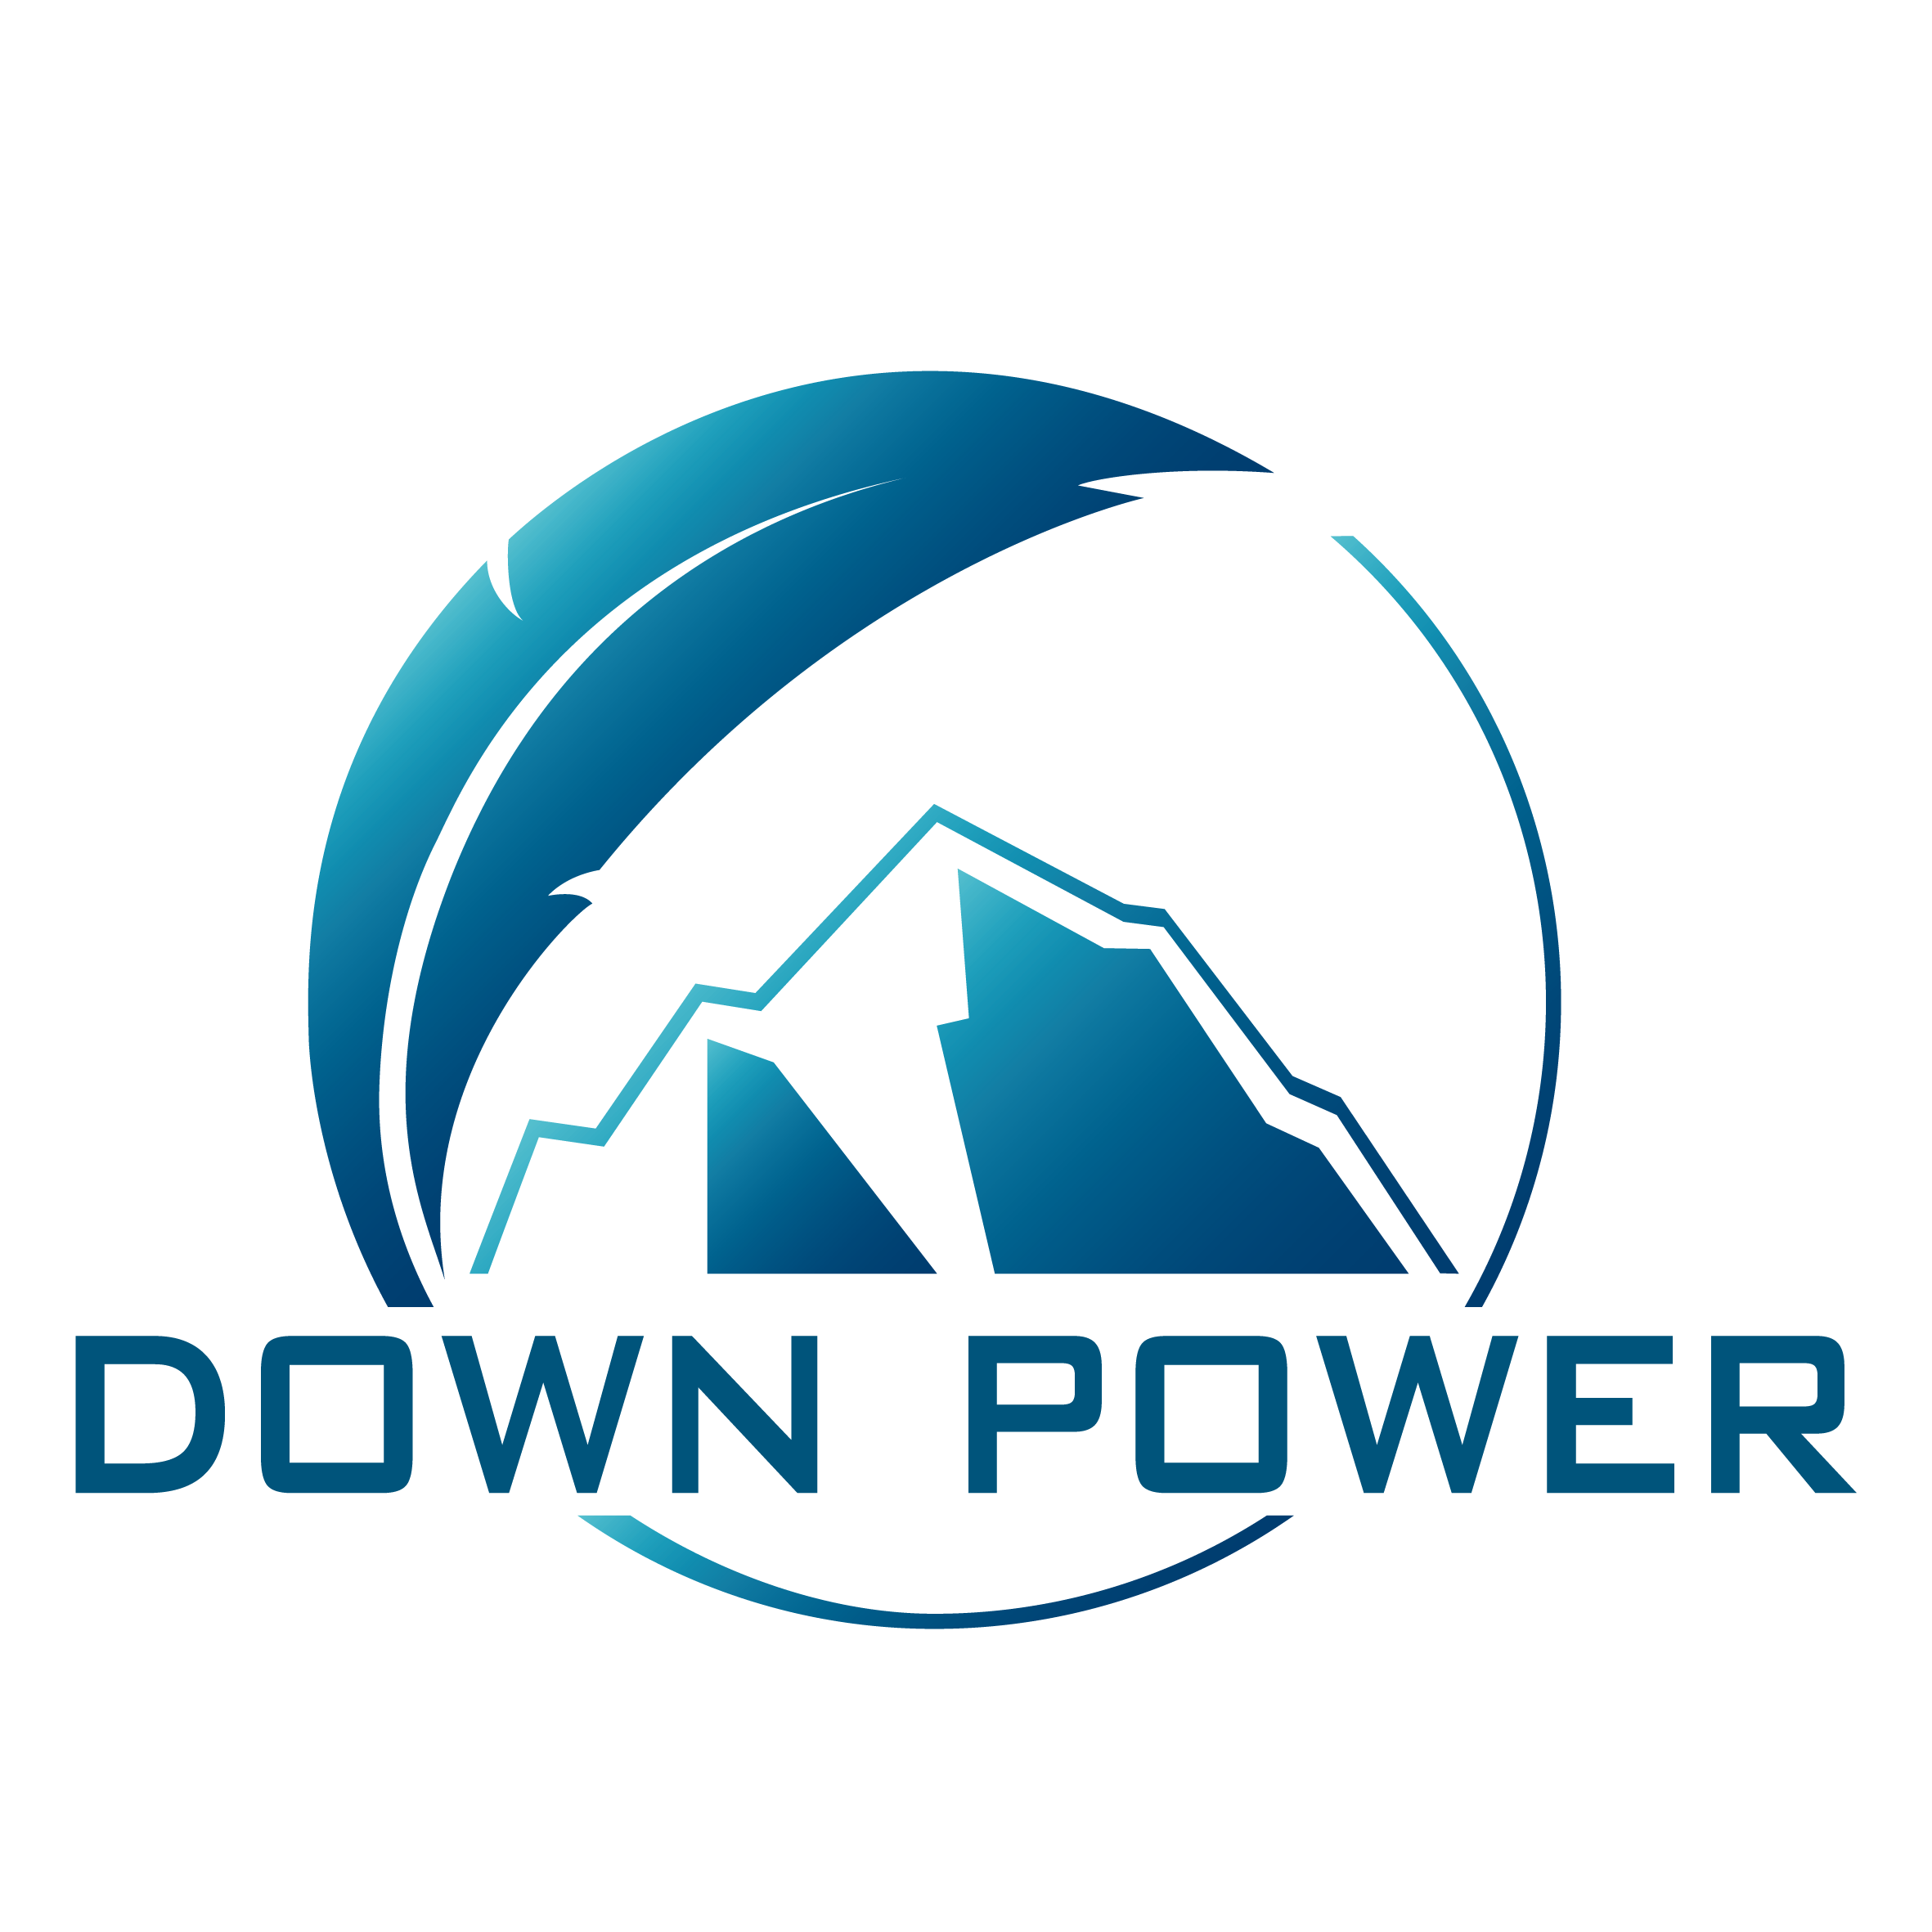 DOWN POWER